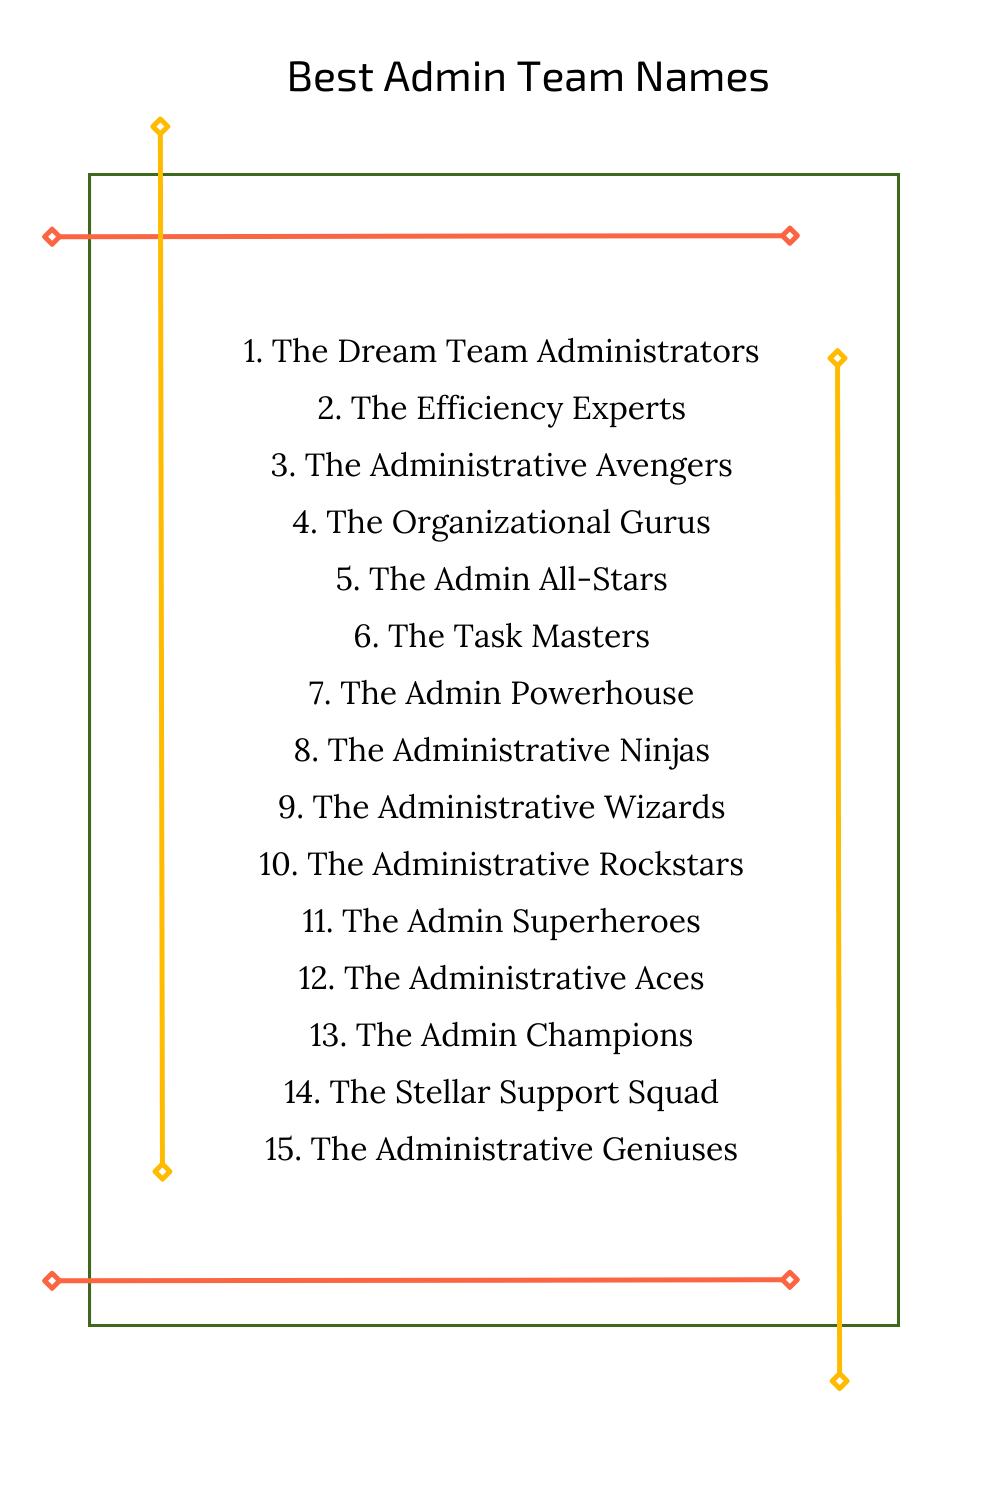 Best Admin Team Names